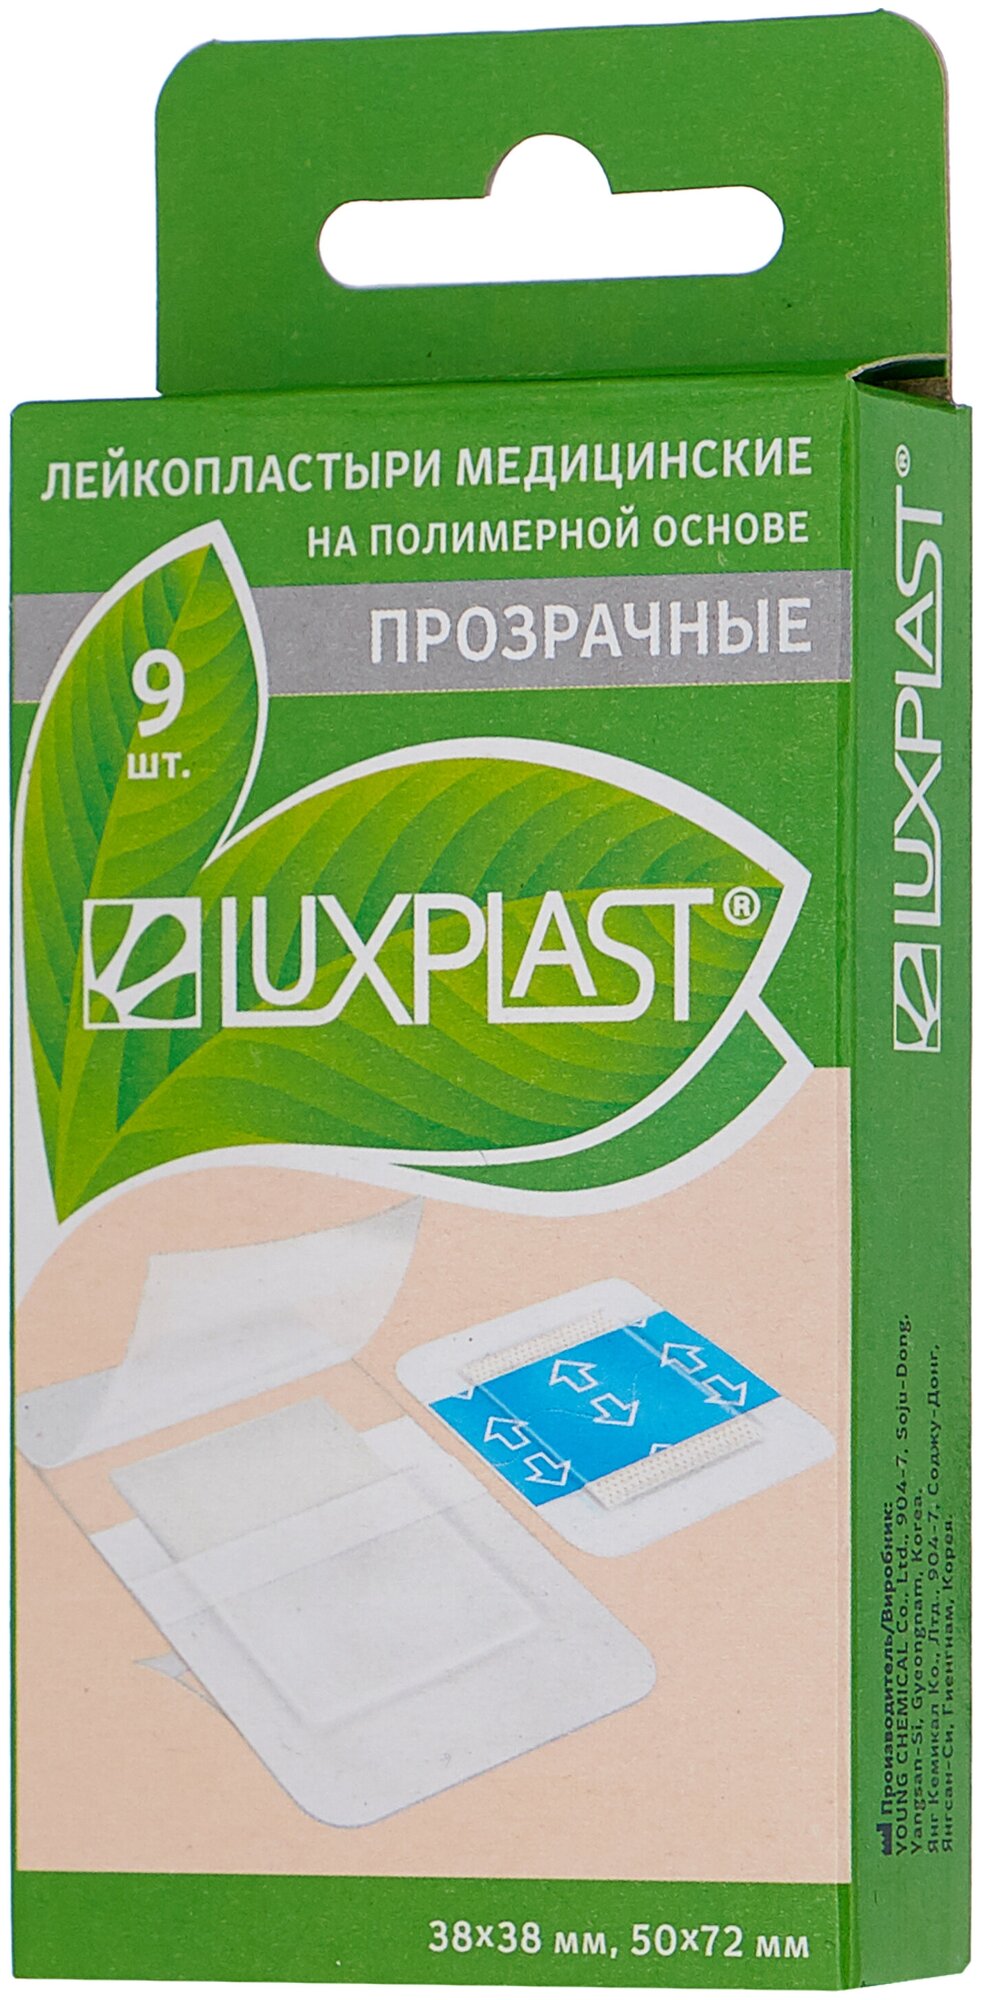 Пластыри Luxplast Прозрачные, 9 шт. - фото №1